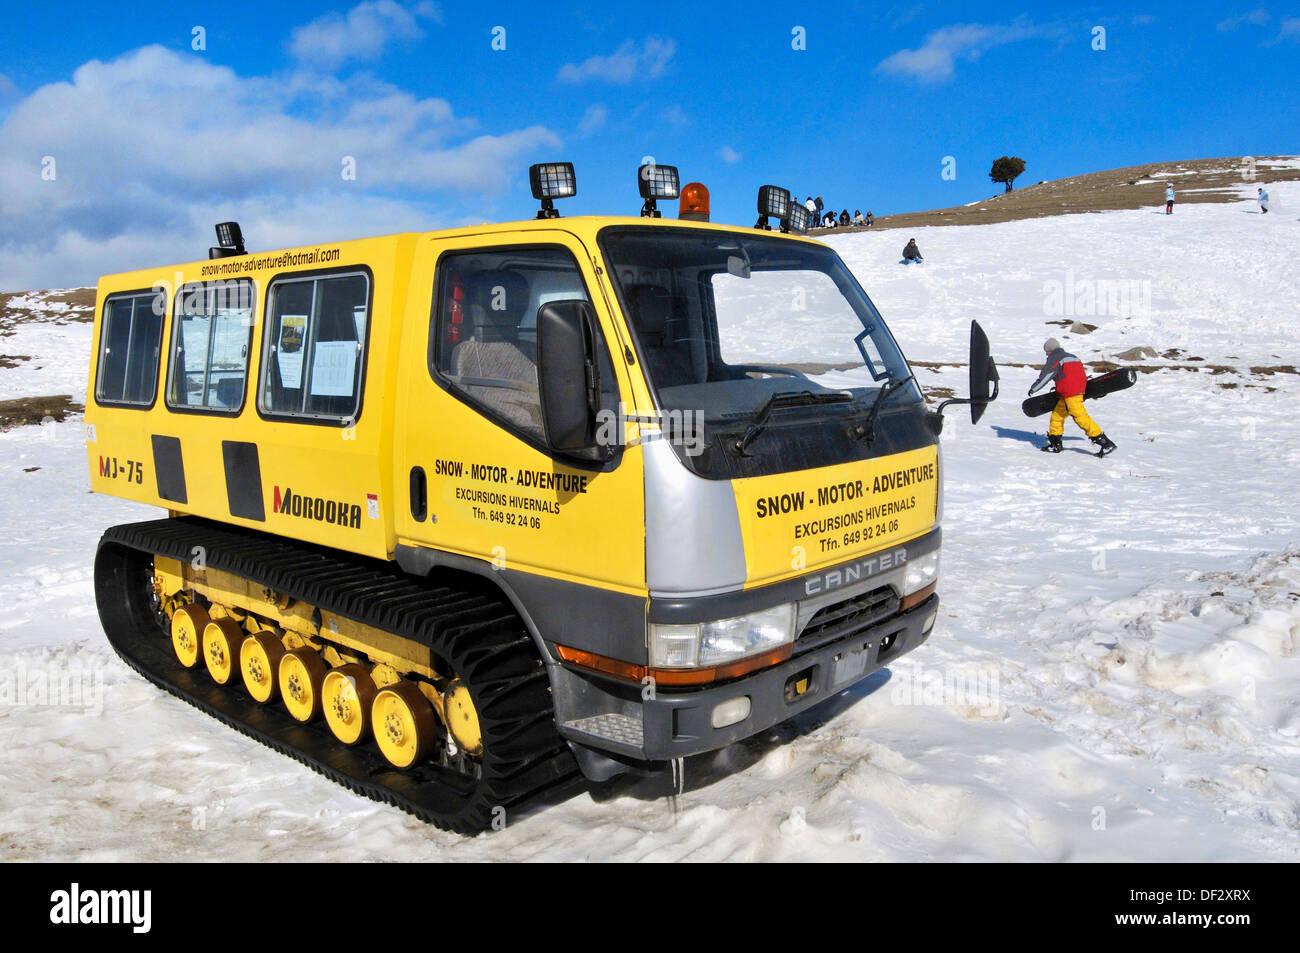 Image result for ski truck